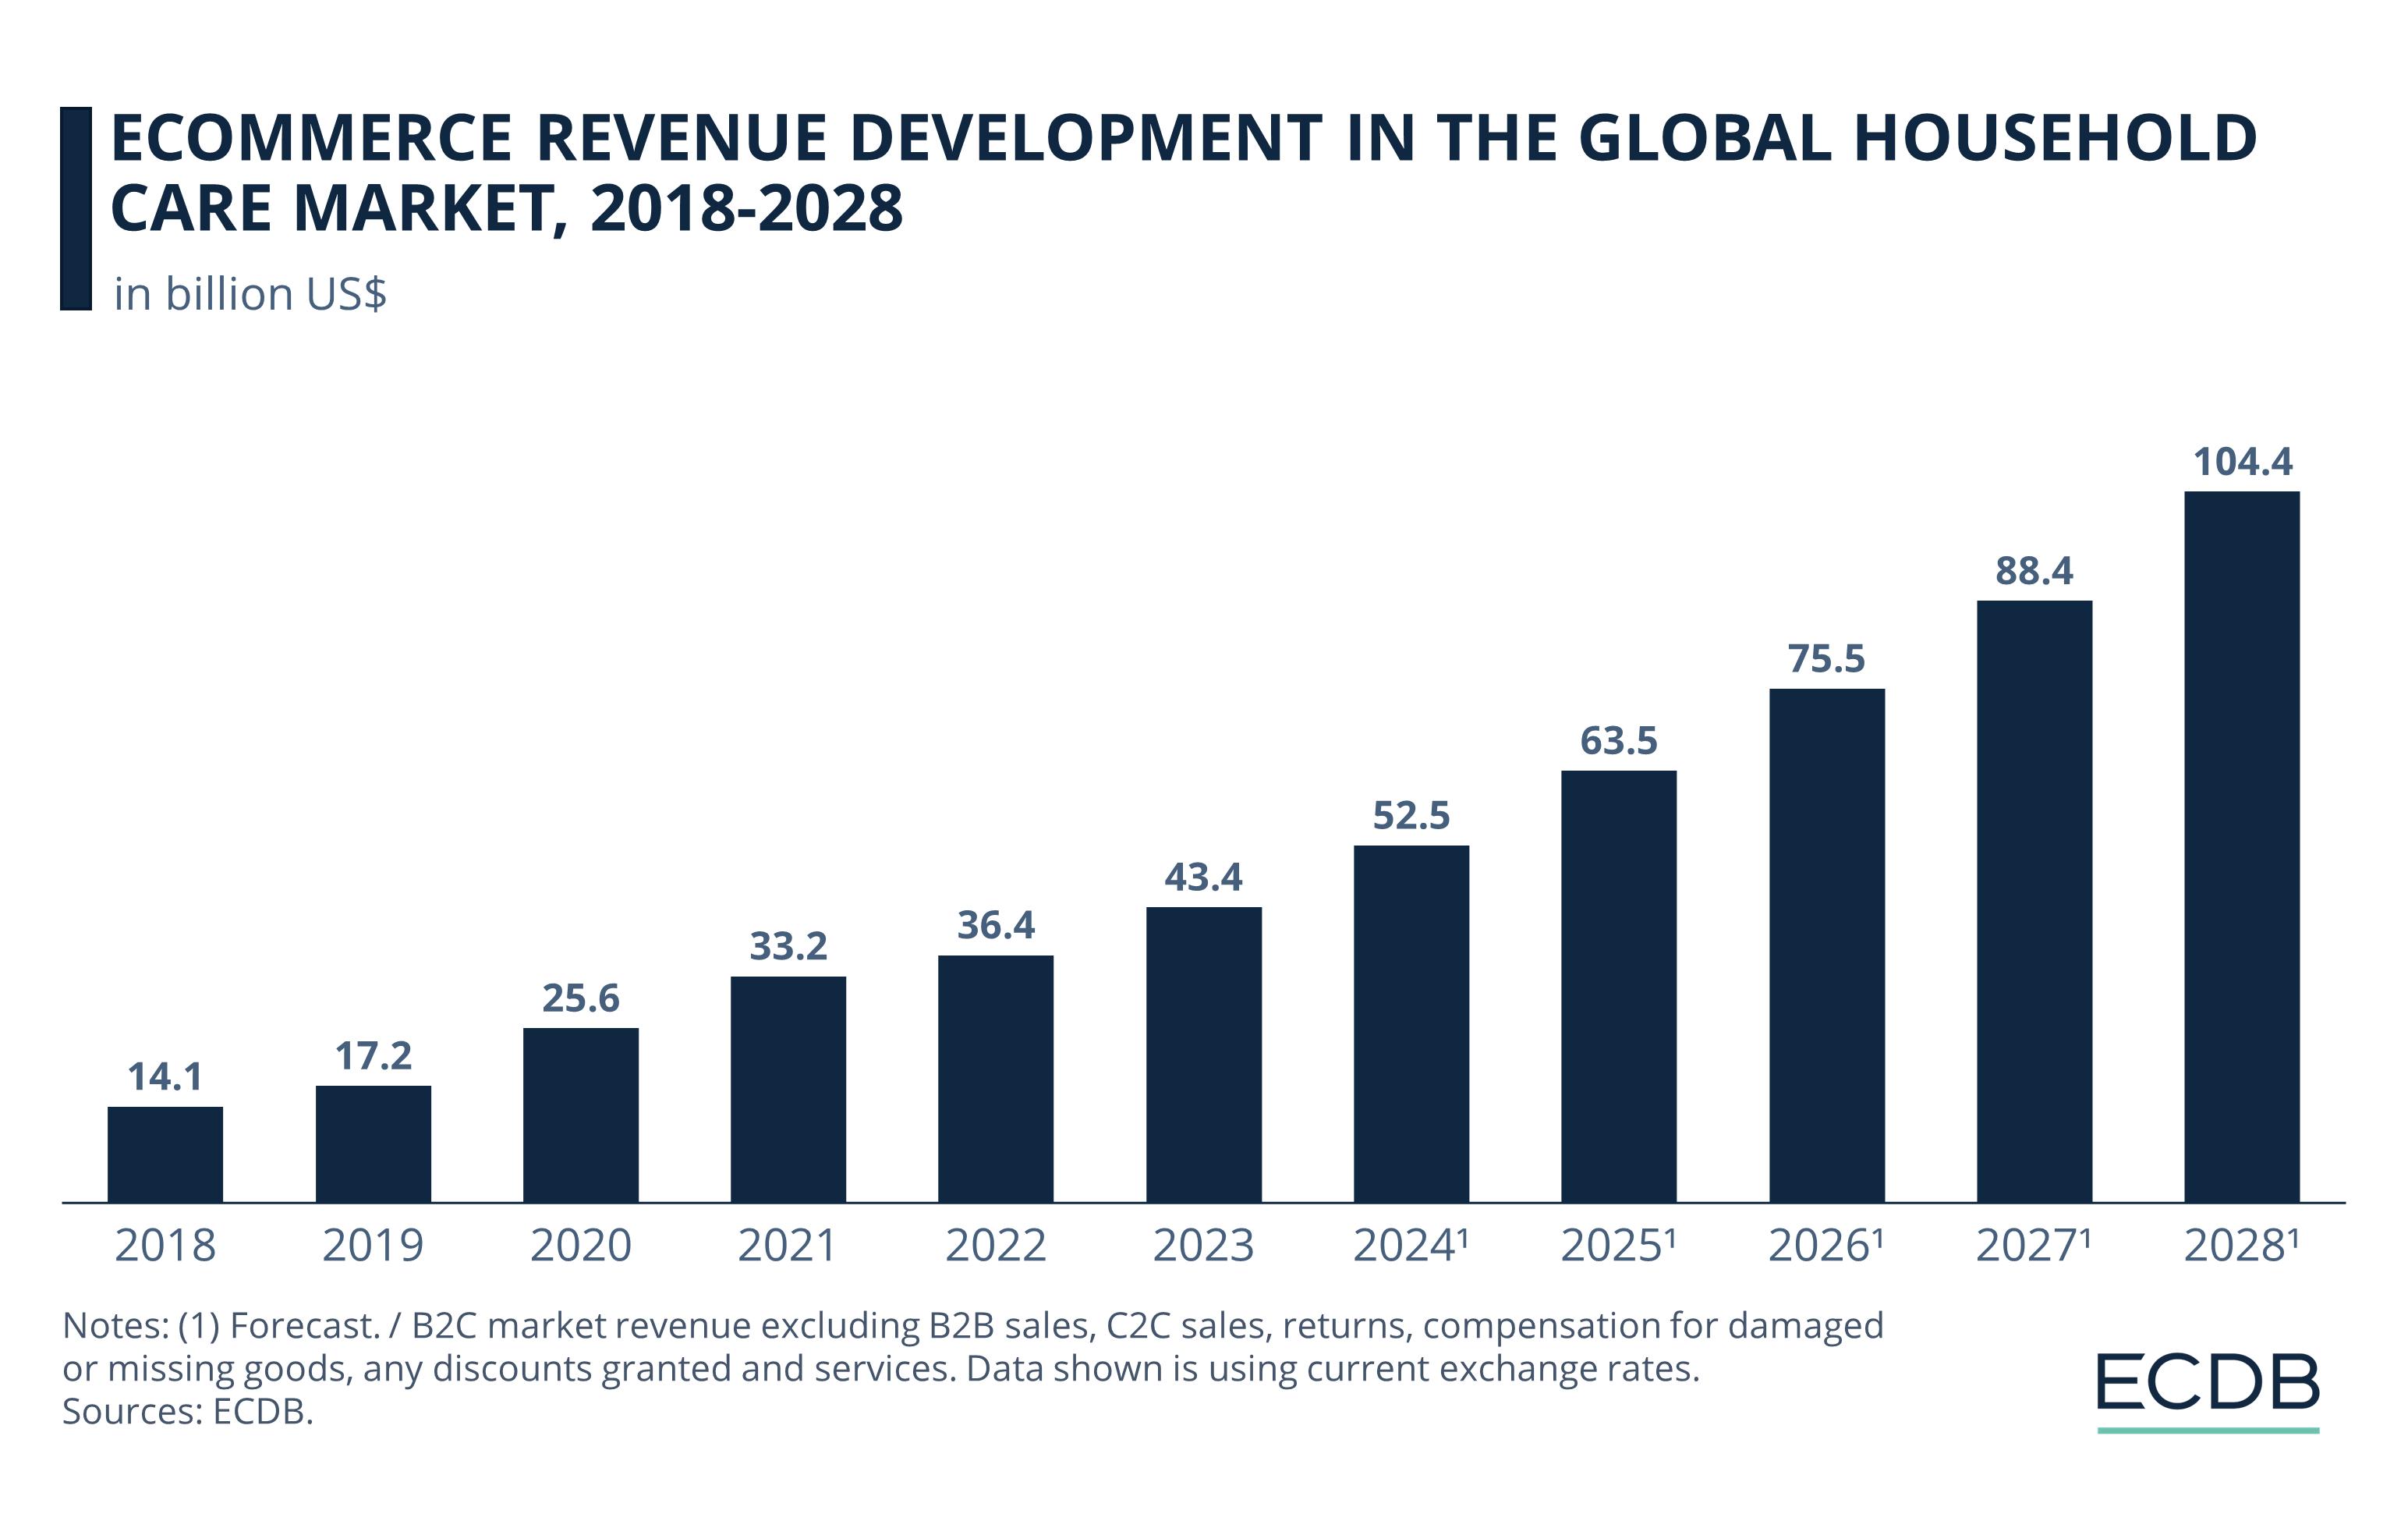 eCommerce Revenue Development in the Global Household Care Market, 2018-2028